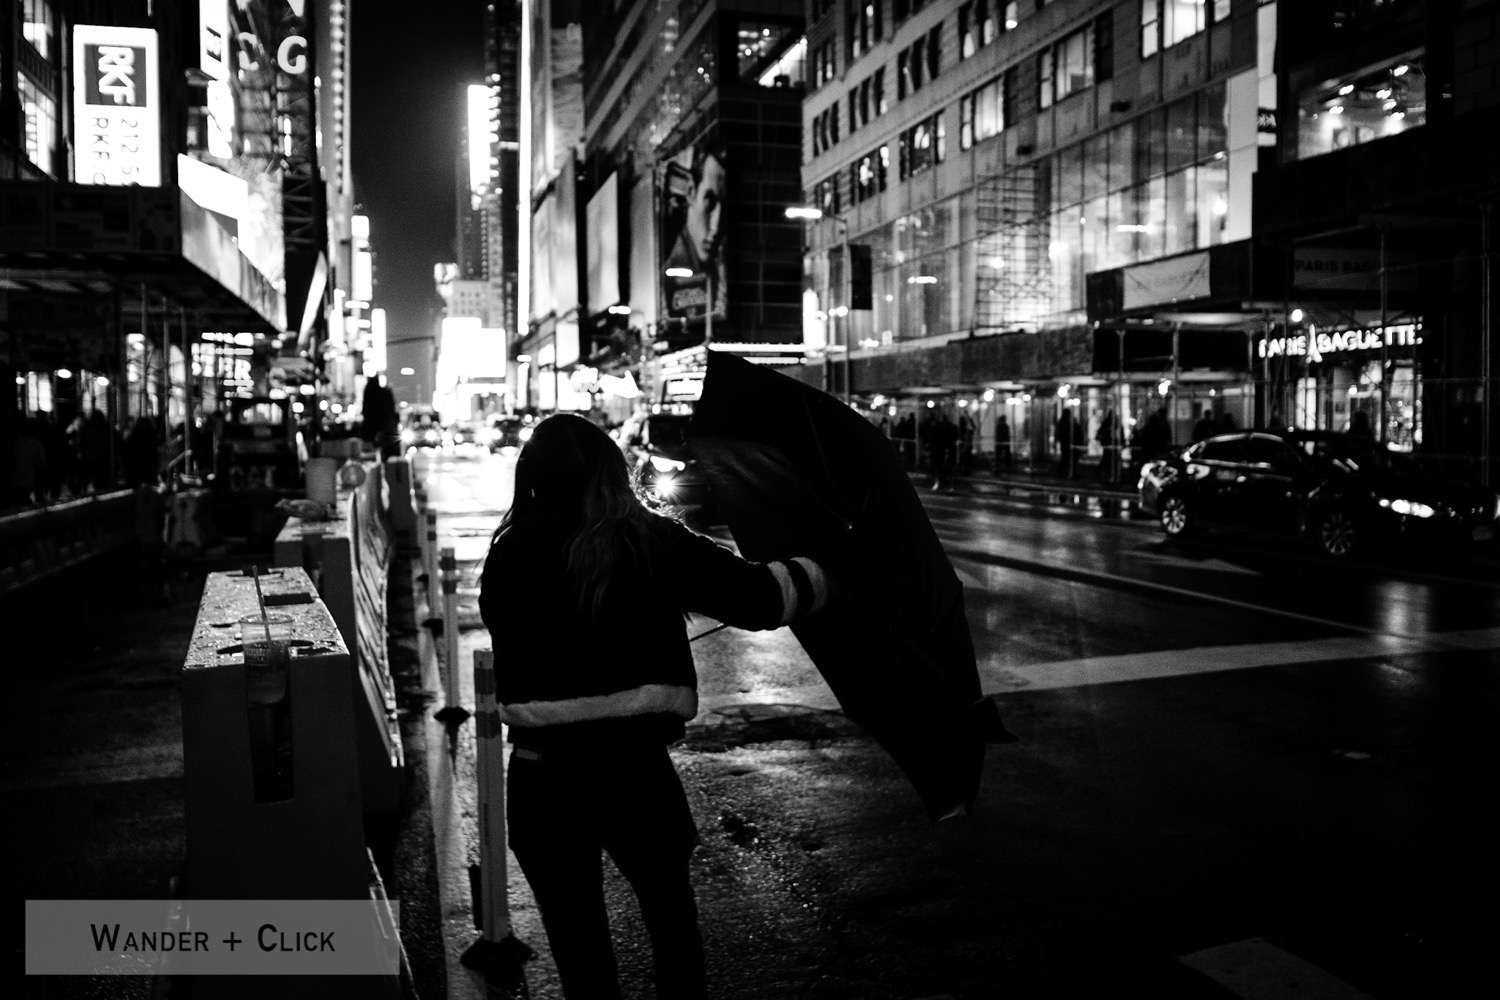 Umbrella vs the city